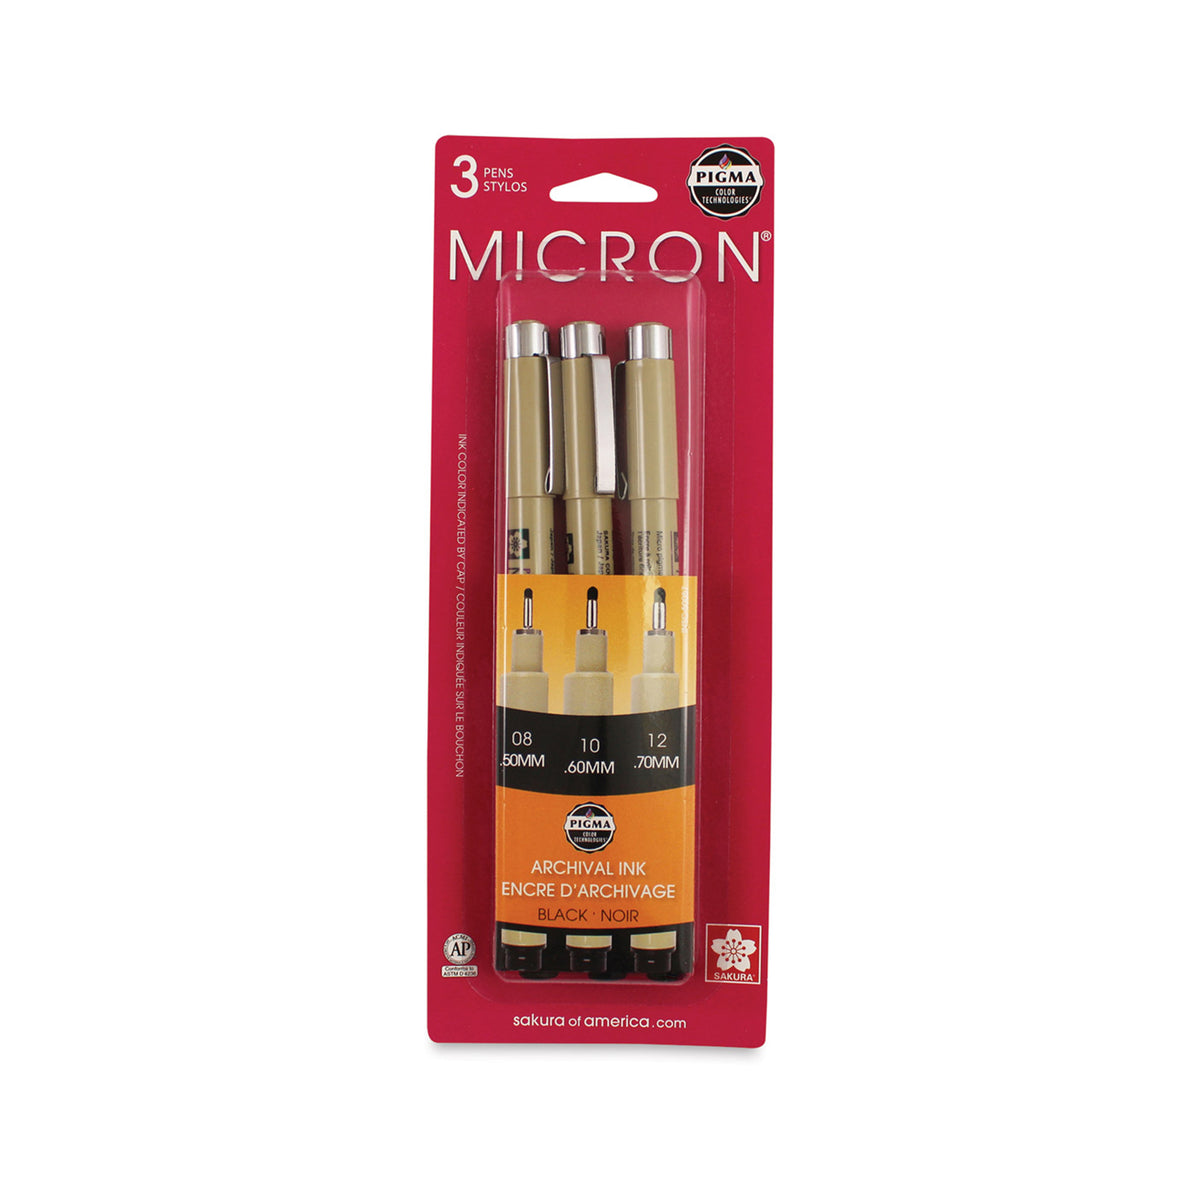 Sakura Pigma Micron Pigment Fineliner Pens 10 / 12 / Brush -  Norway